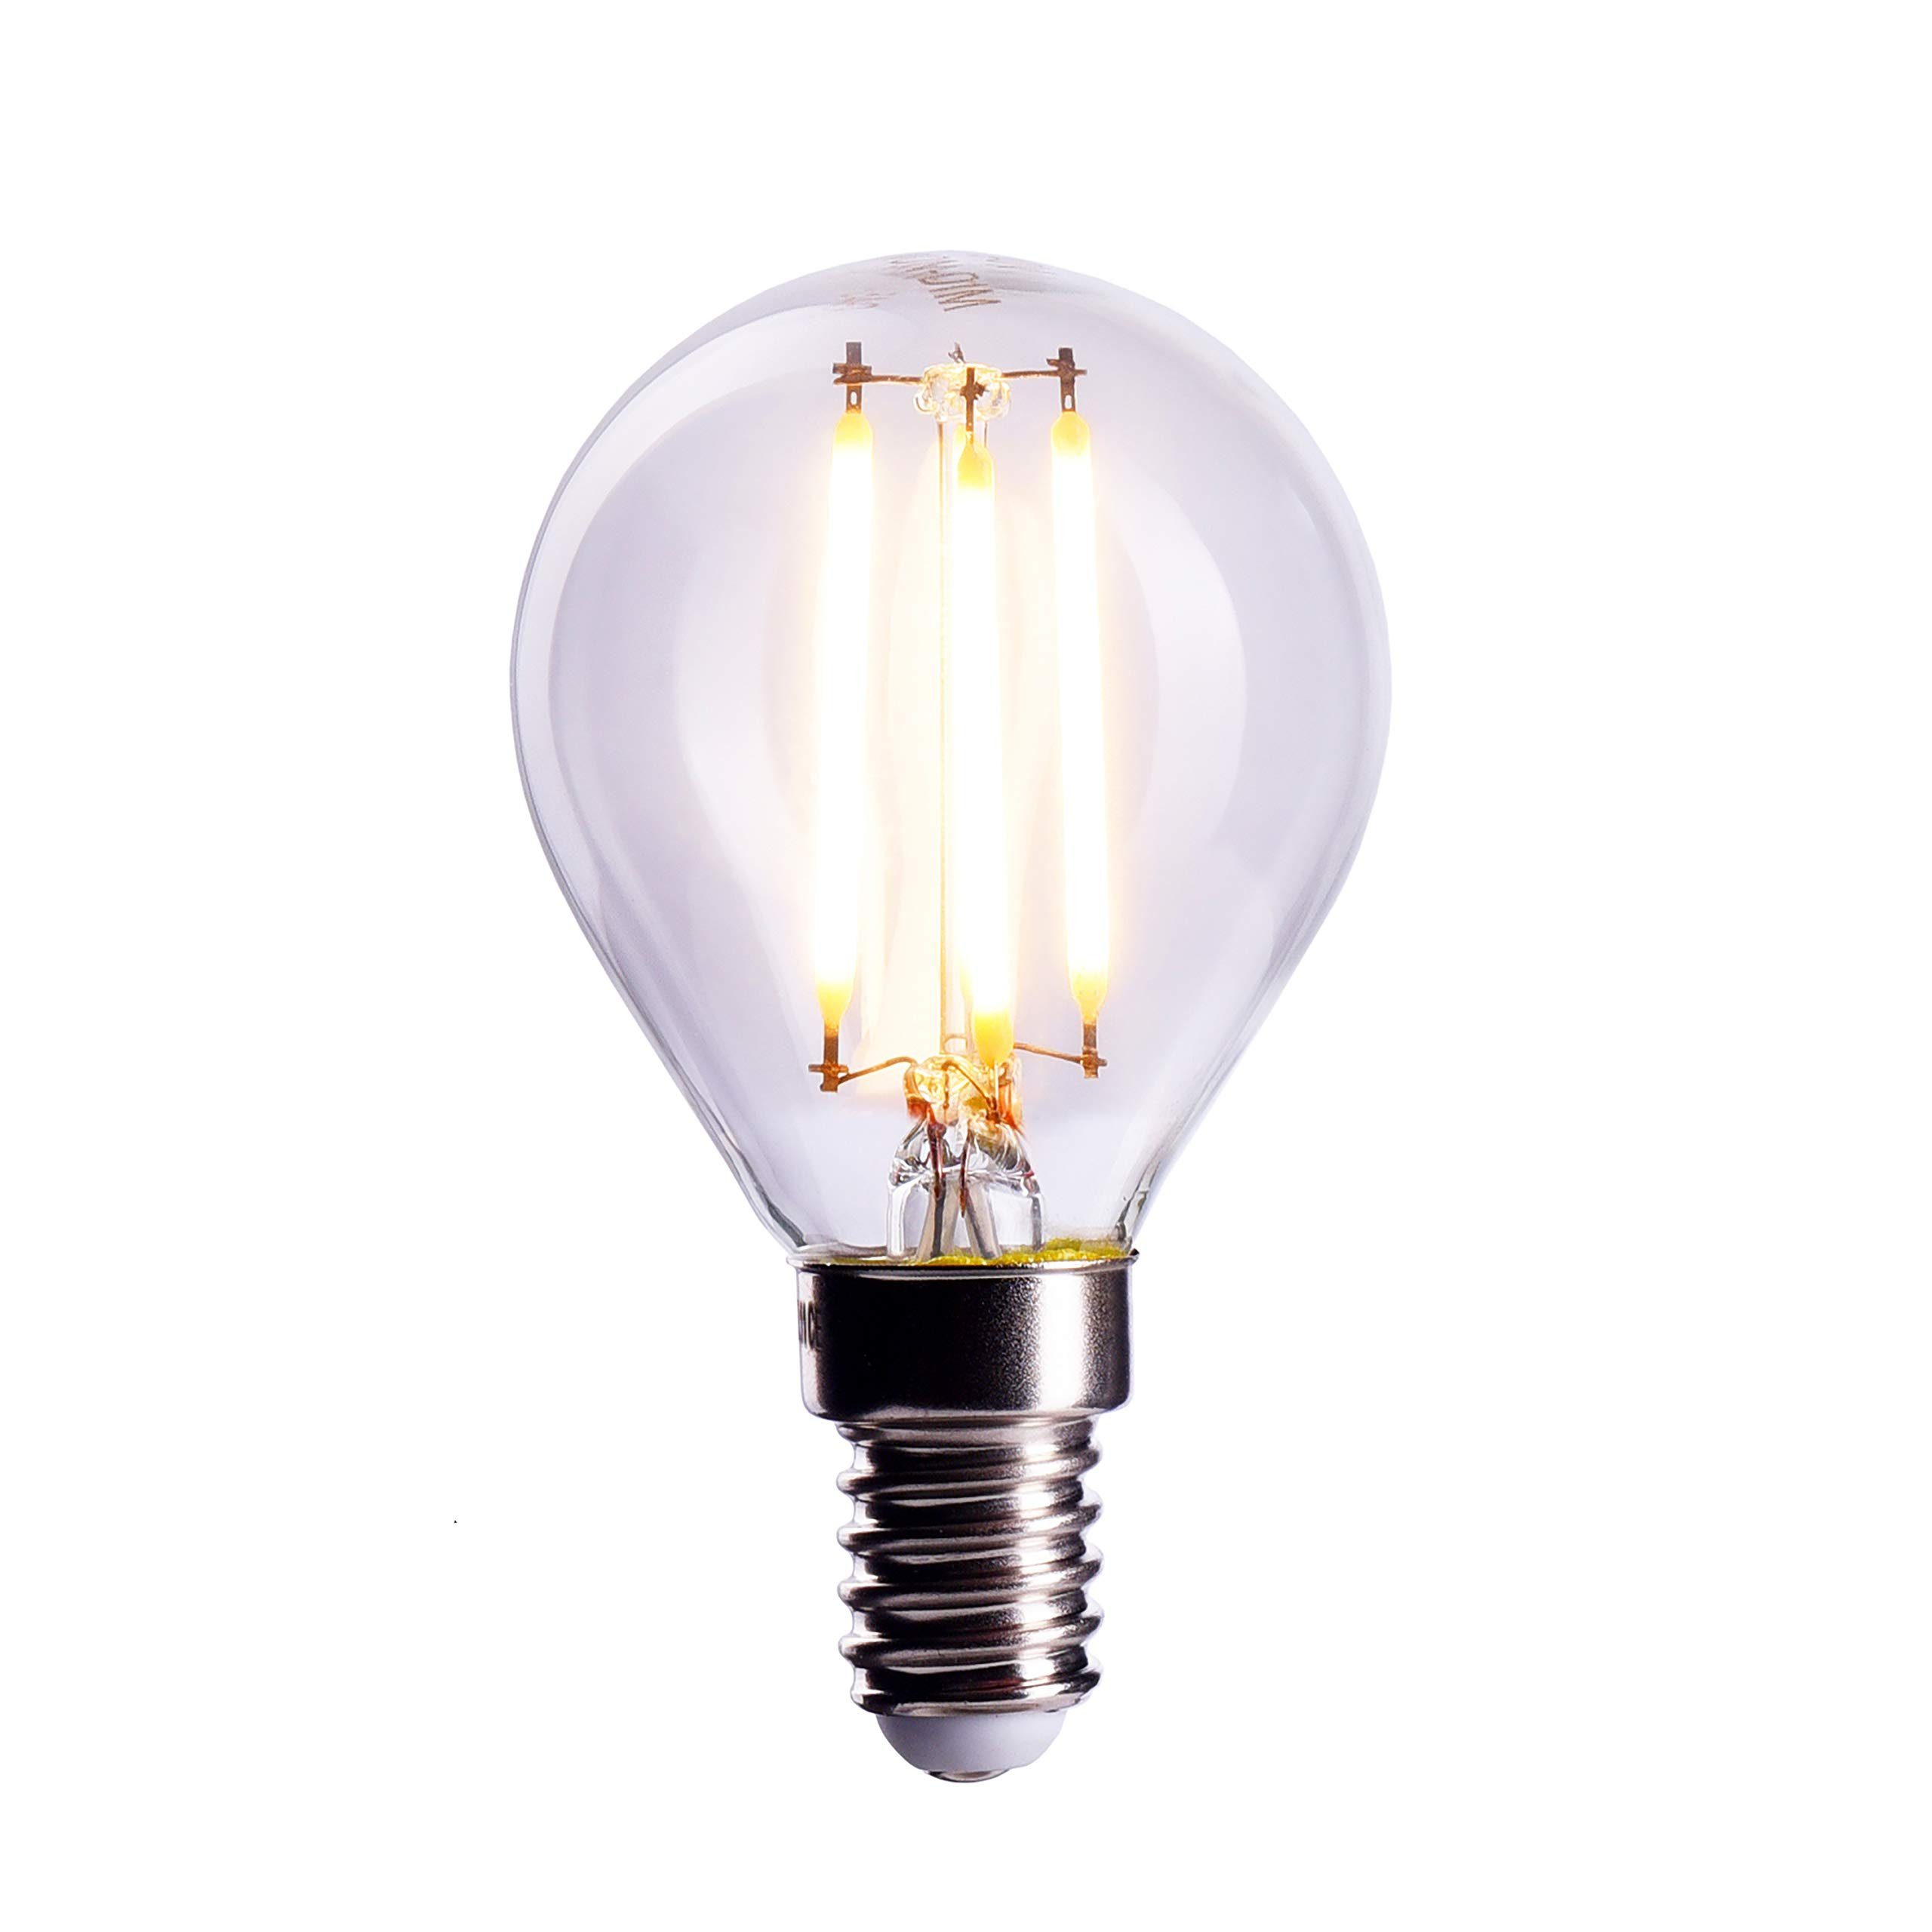 Crown LED LED-Glühbirne E14, 4W, Dimmbar, 40W Birne ersetzen, Warmweiß,  230V Halogenlampe, 1 Stück (1er Pack)Klassisch